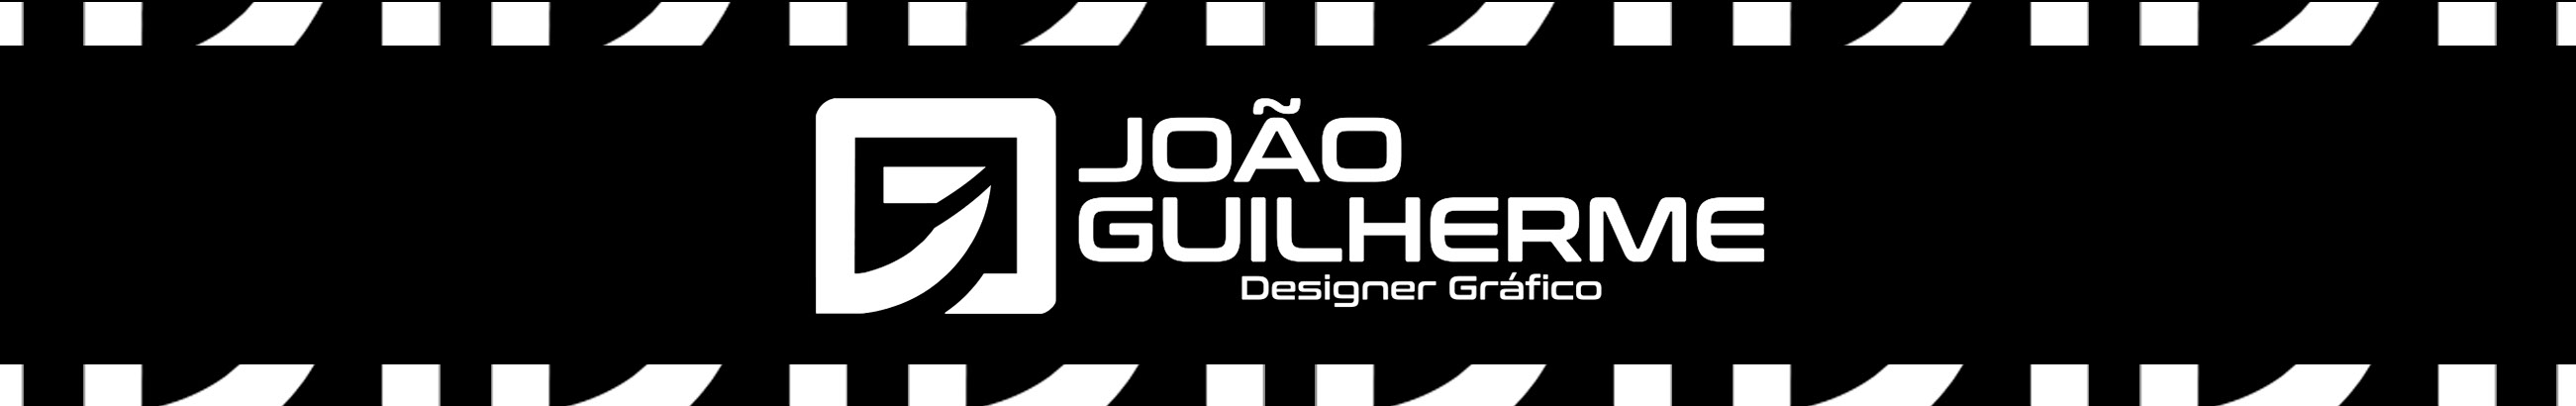 JOÃO GUILHERME's profile banner